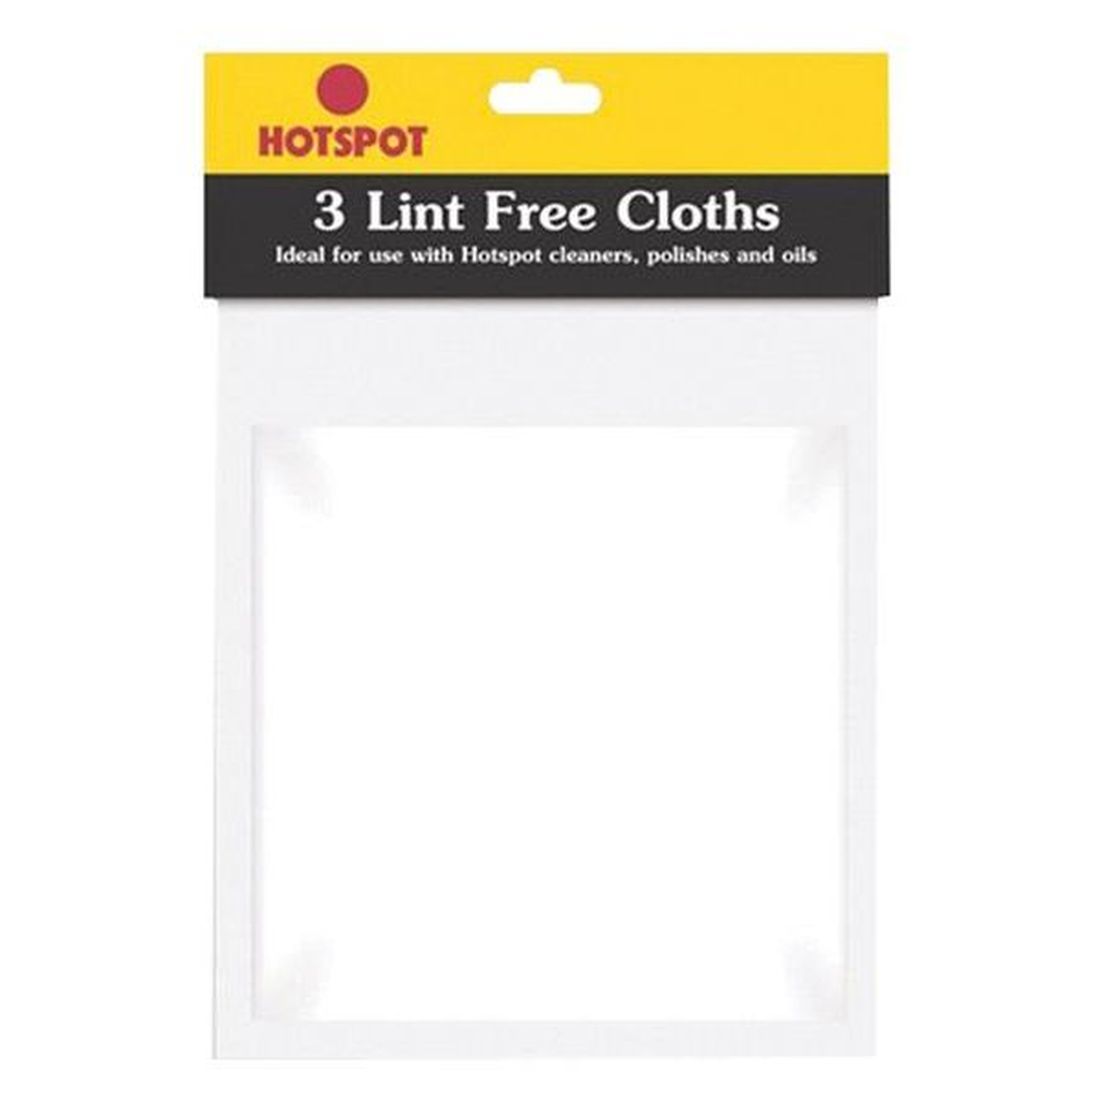 Hotspot Lint Free Cloths                  